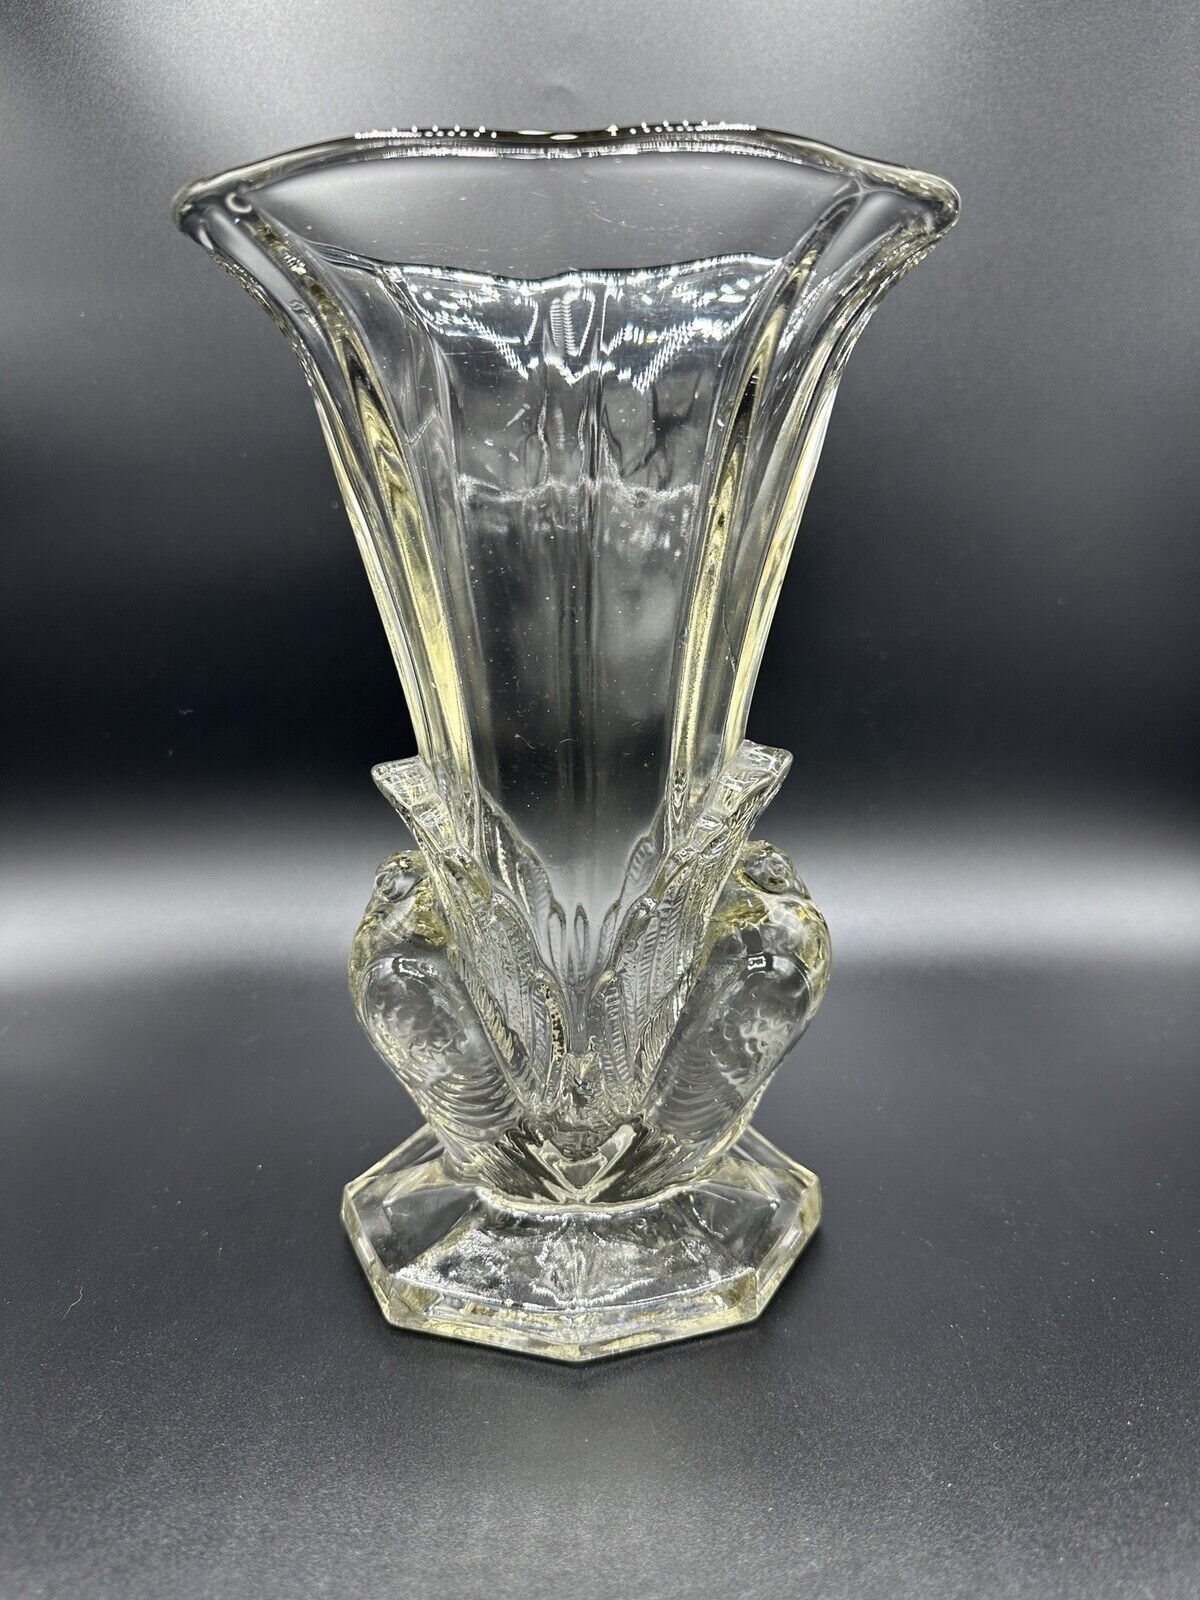 Antique 1930s Tauben (Pigeons) Art Deco Libochovice Glass Vase